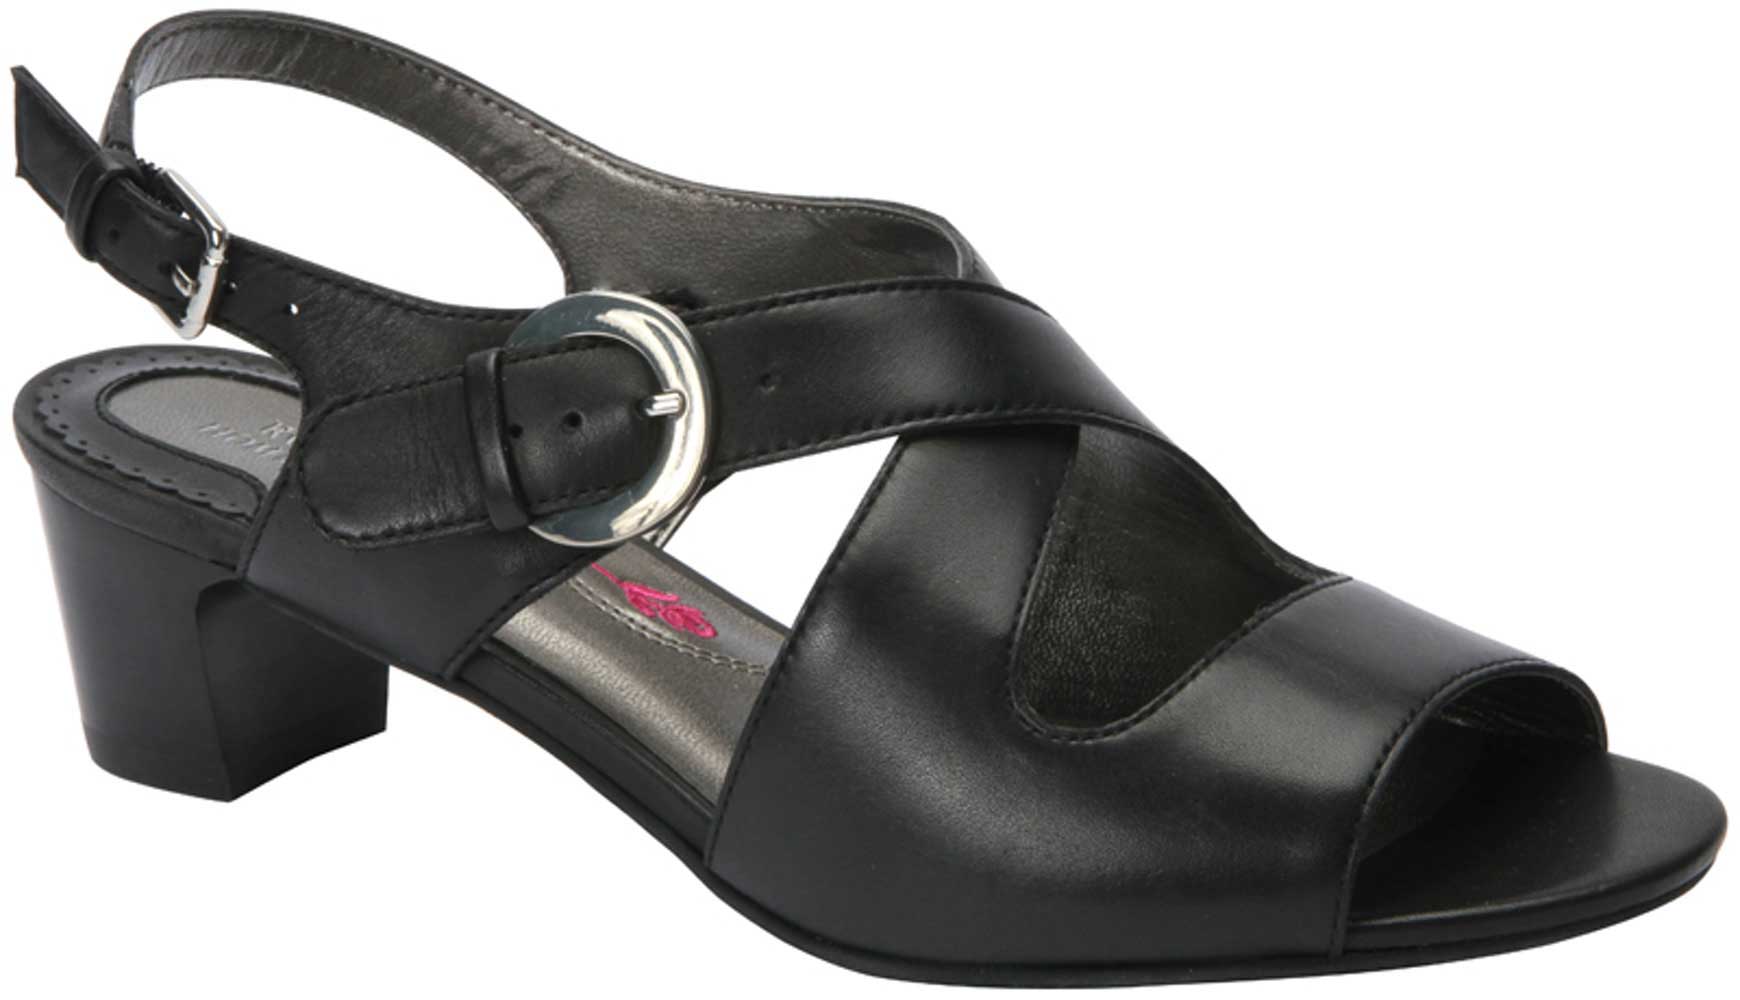 comfort dress sandals for women